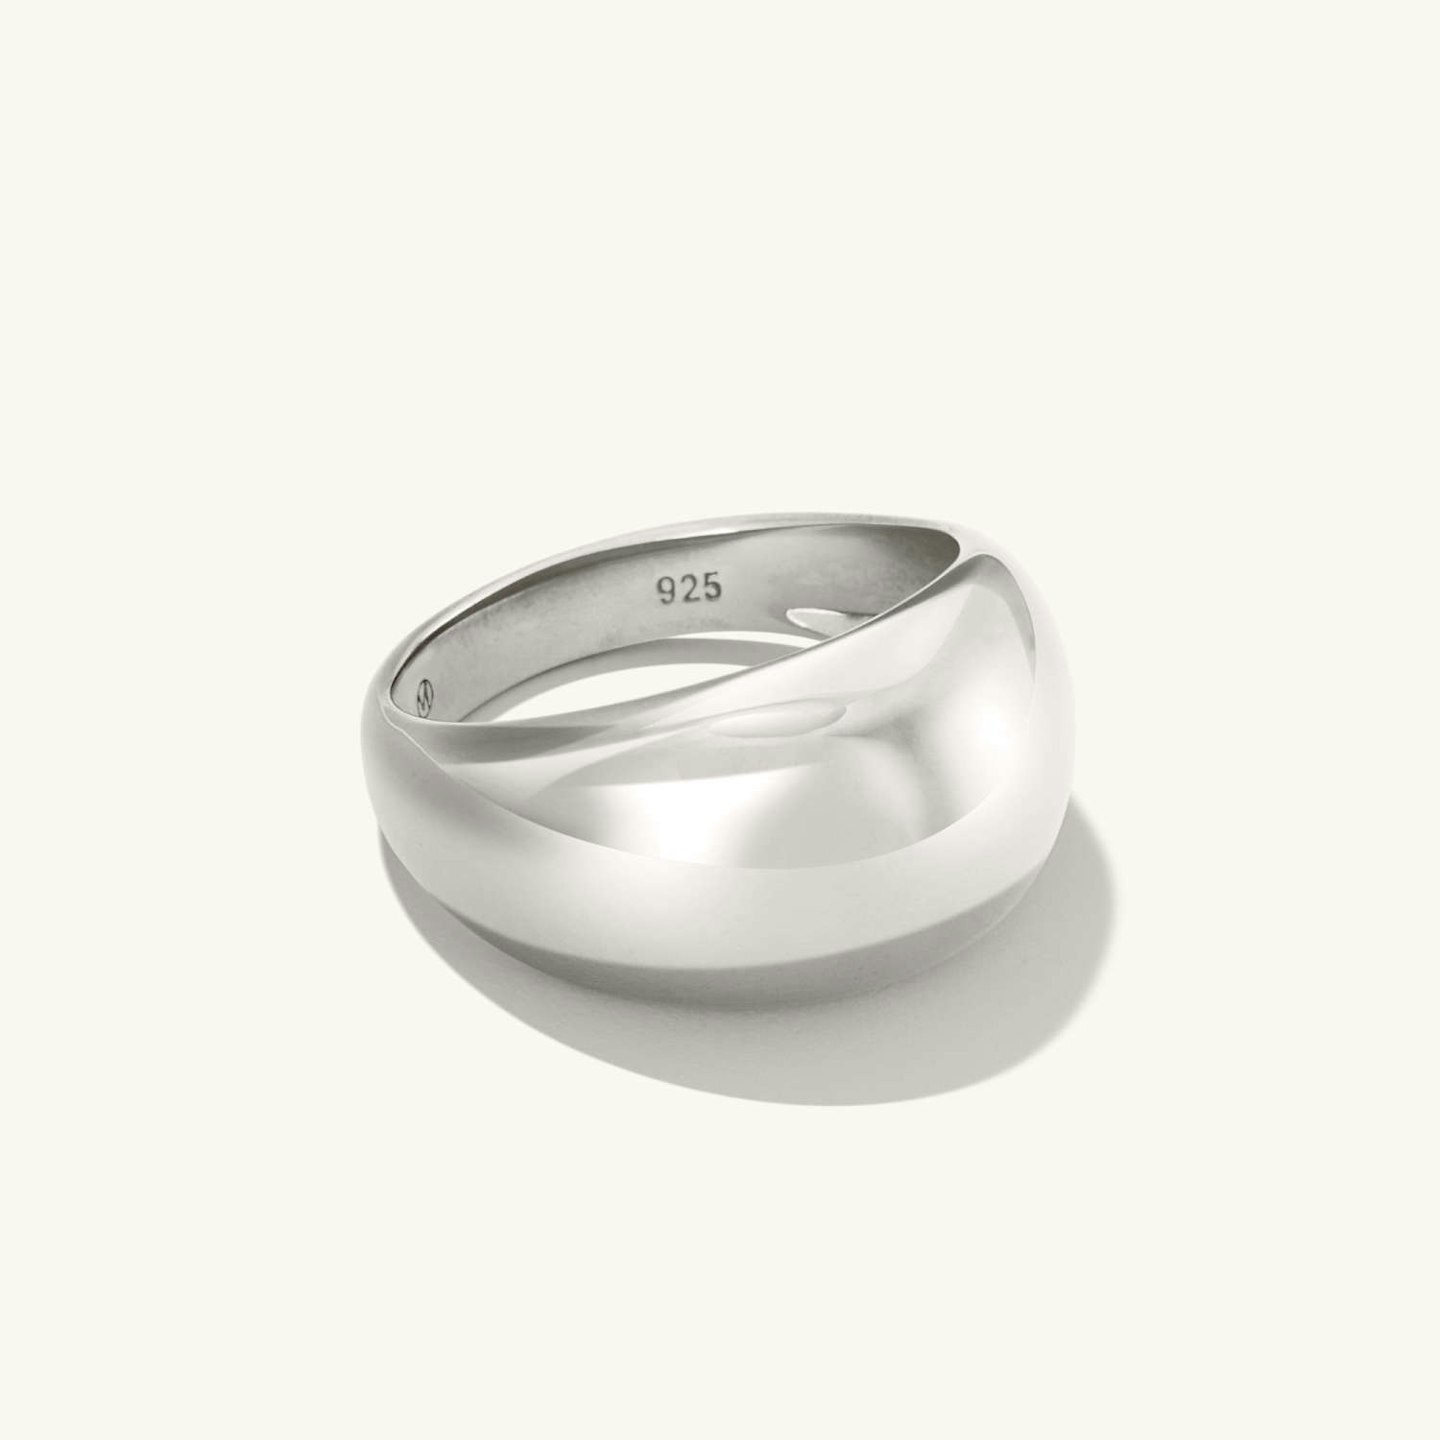 Mejuri silver dome ring